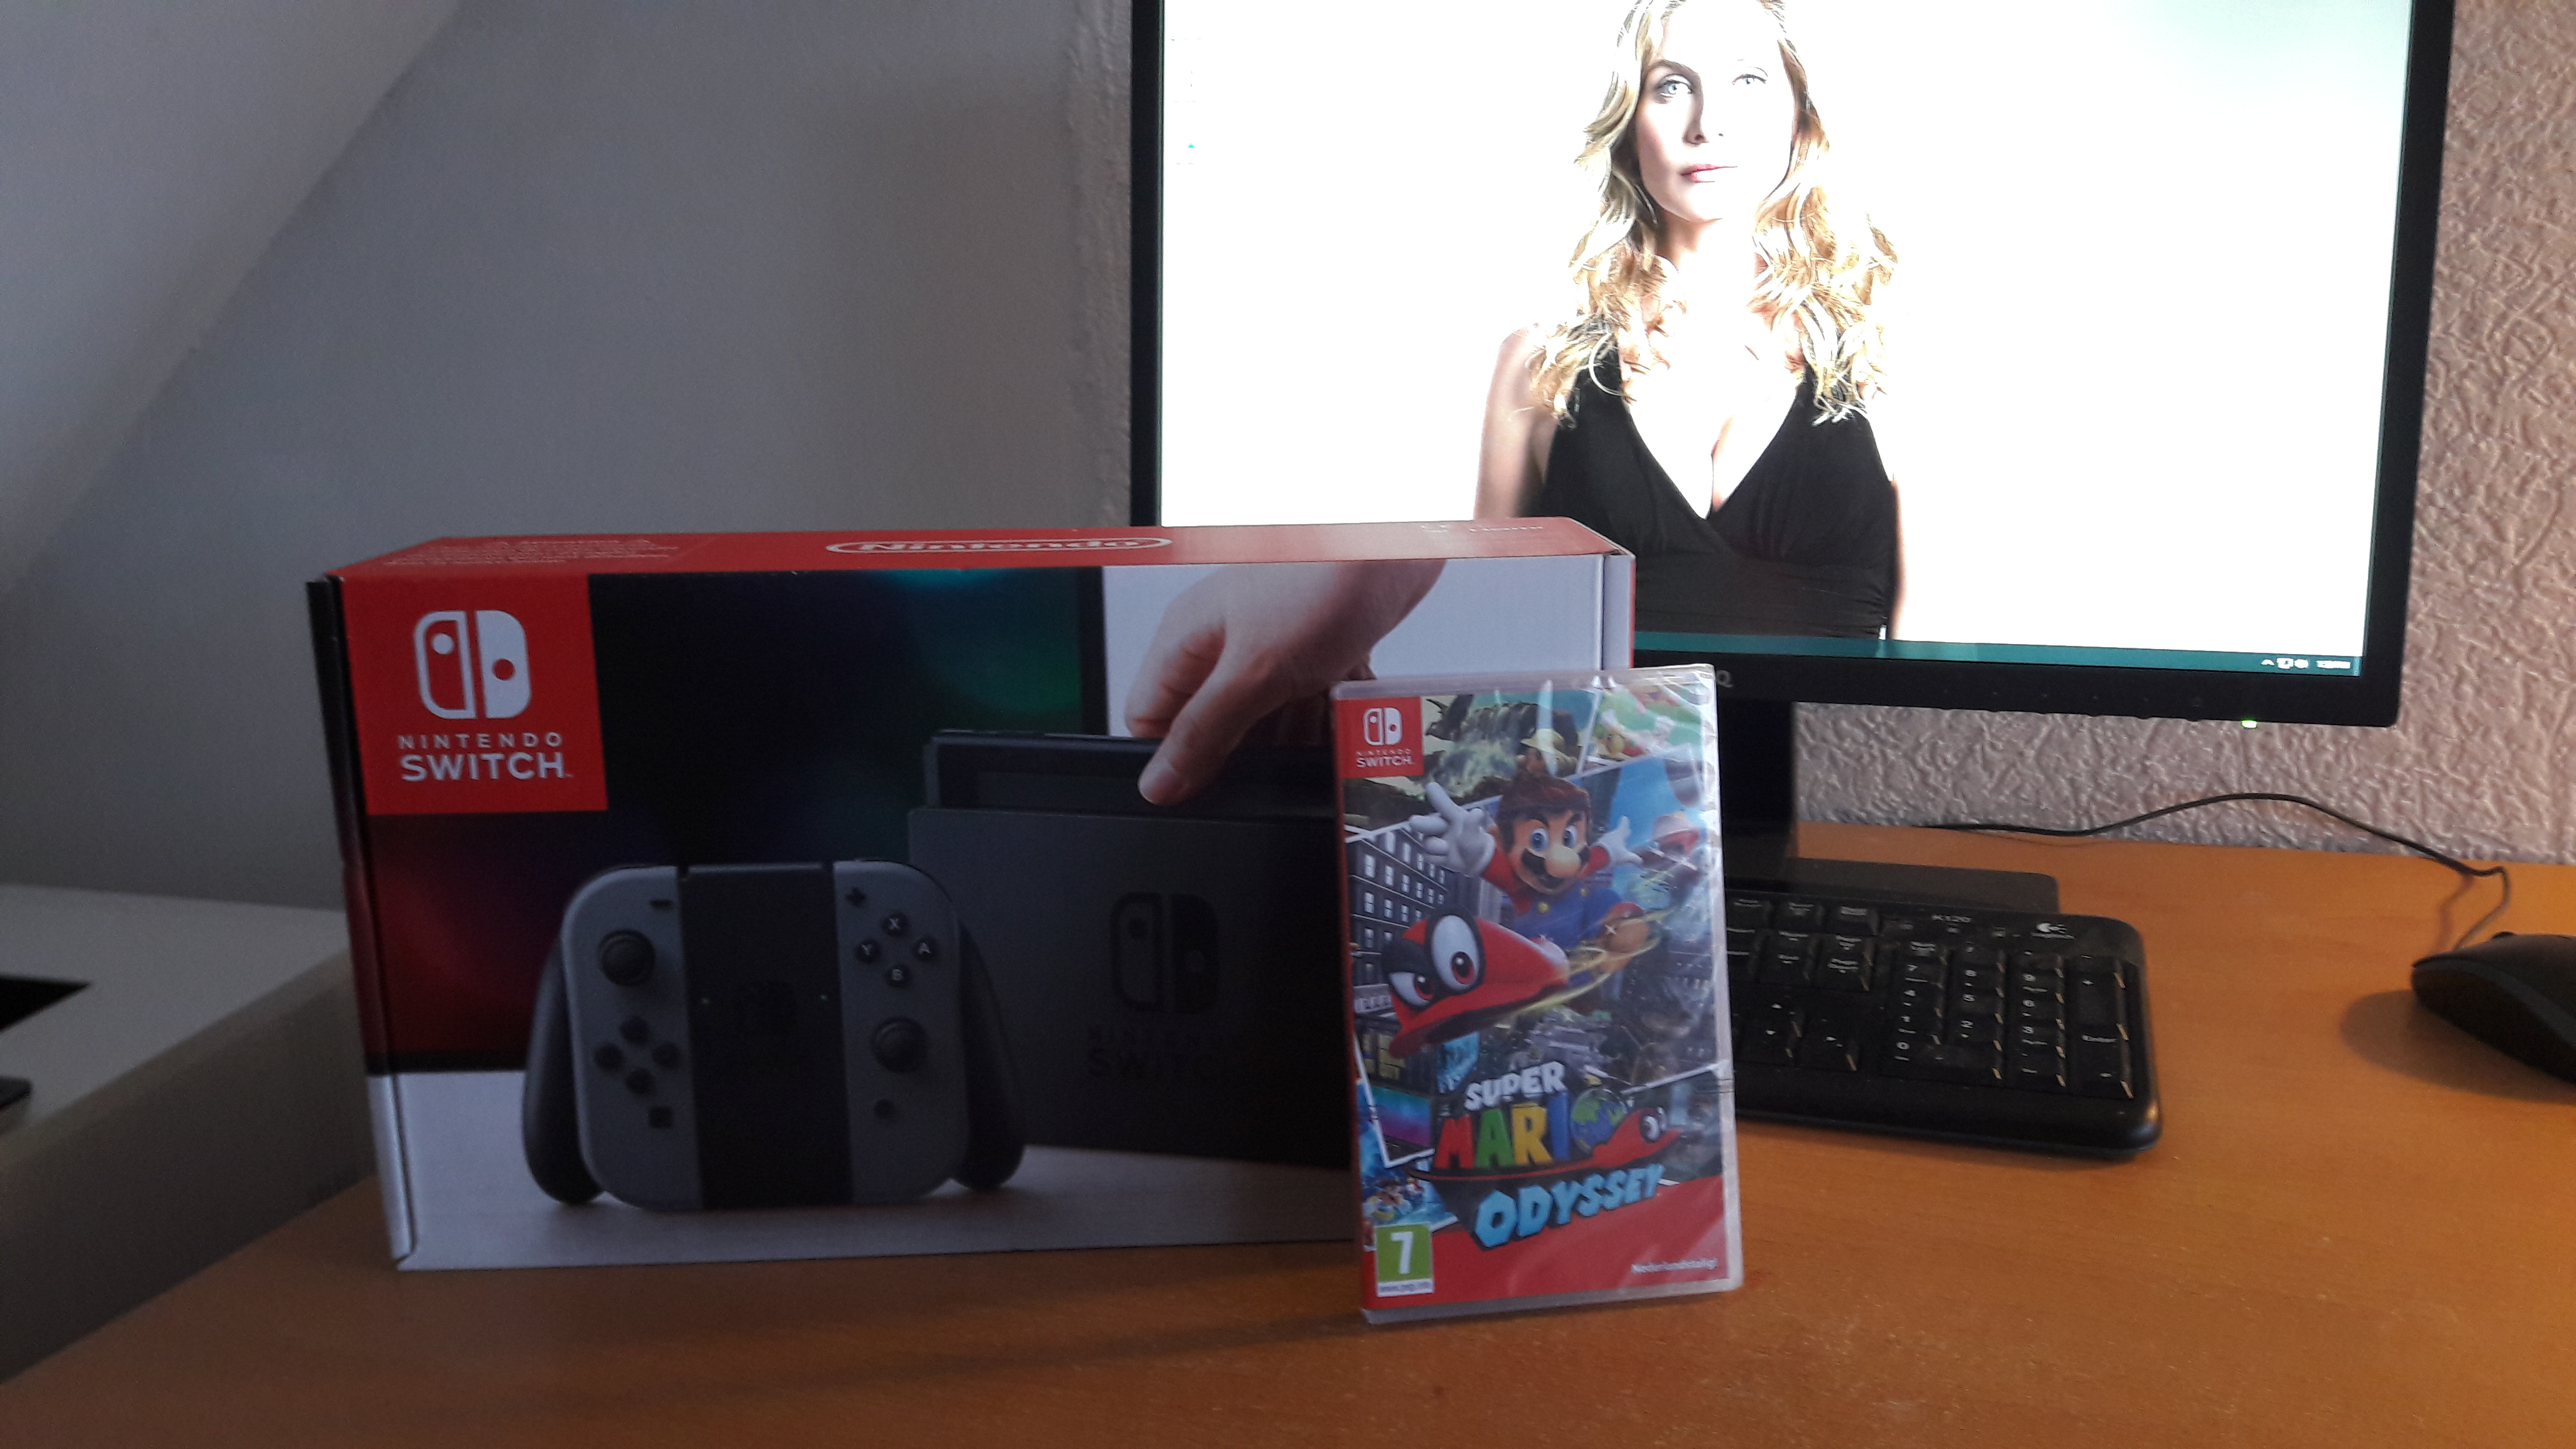 Nintendo Switch box and Super Mario Odyssey with Elizabeth Mitchell